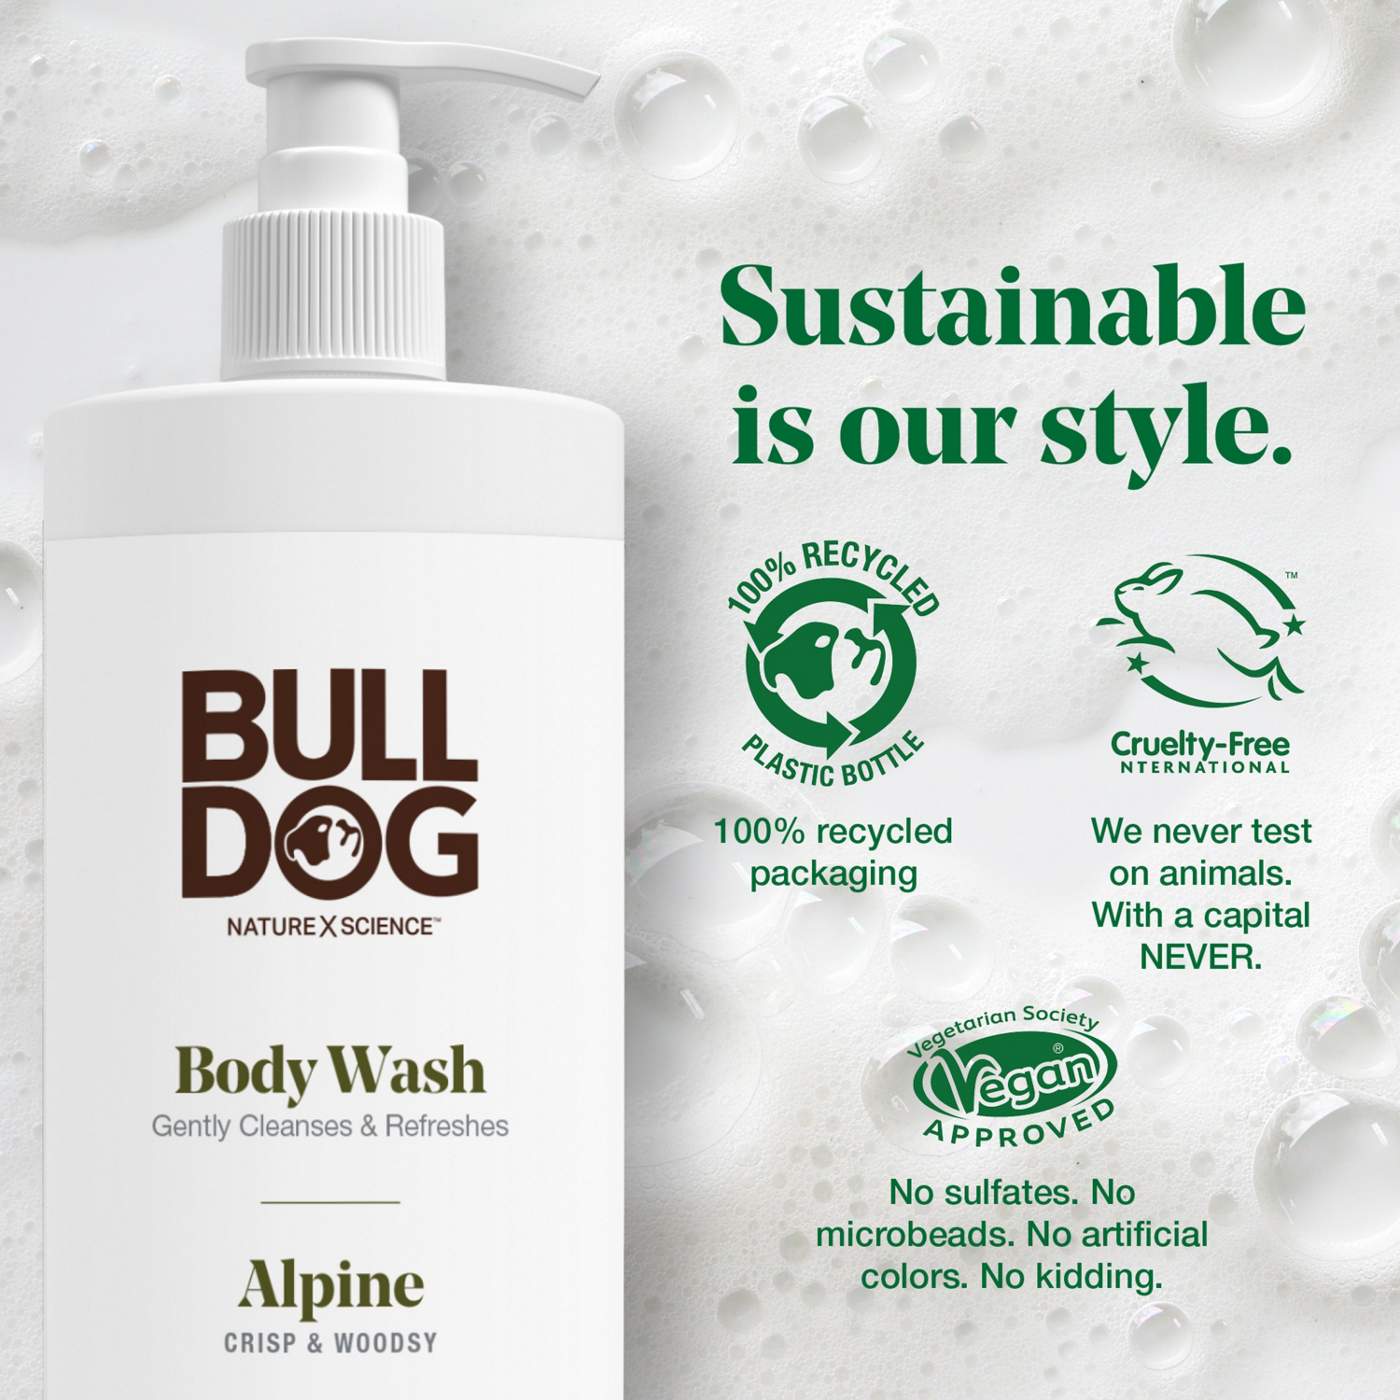 Bulldog Body Wash - Crisp & Woodsy Alpine; image 6 of 7